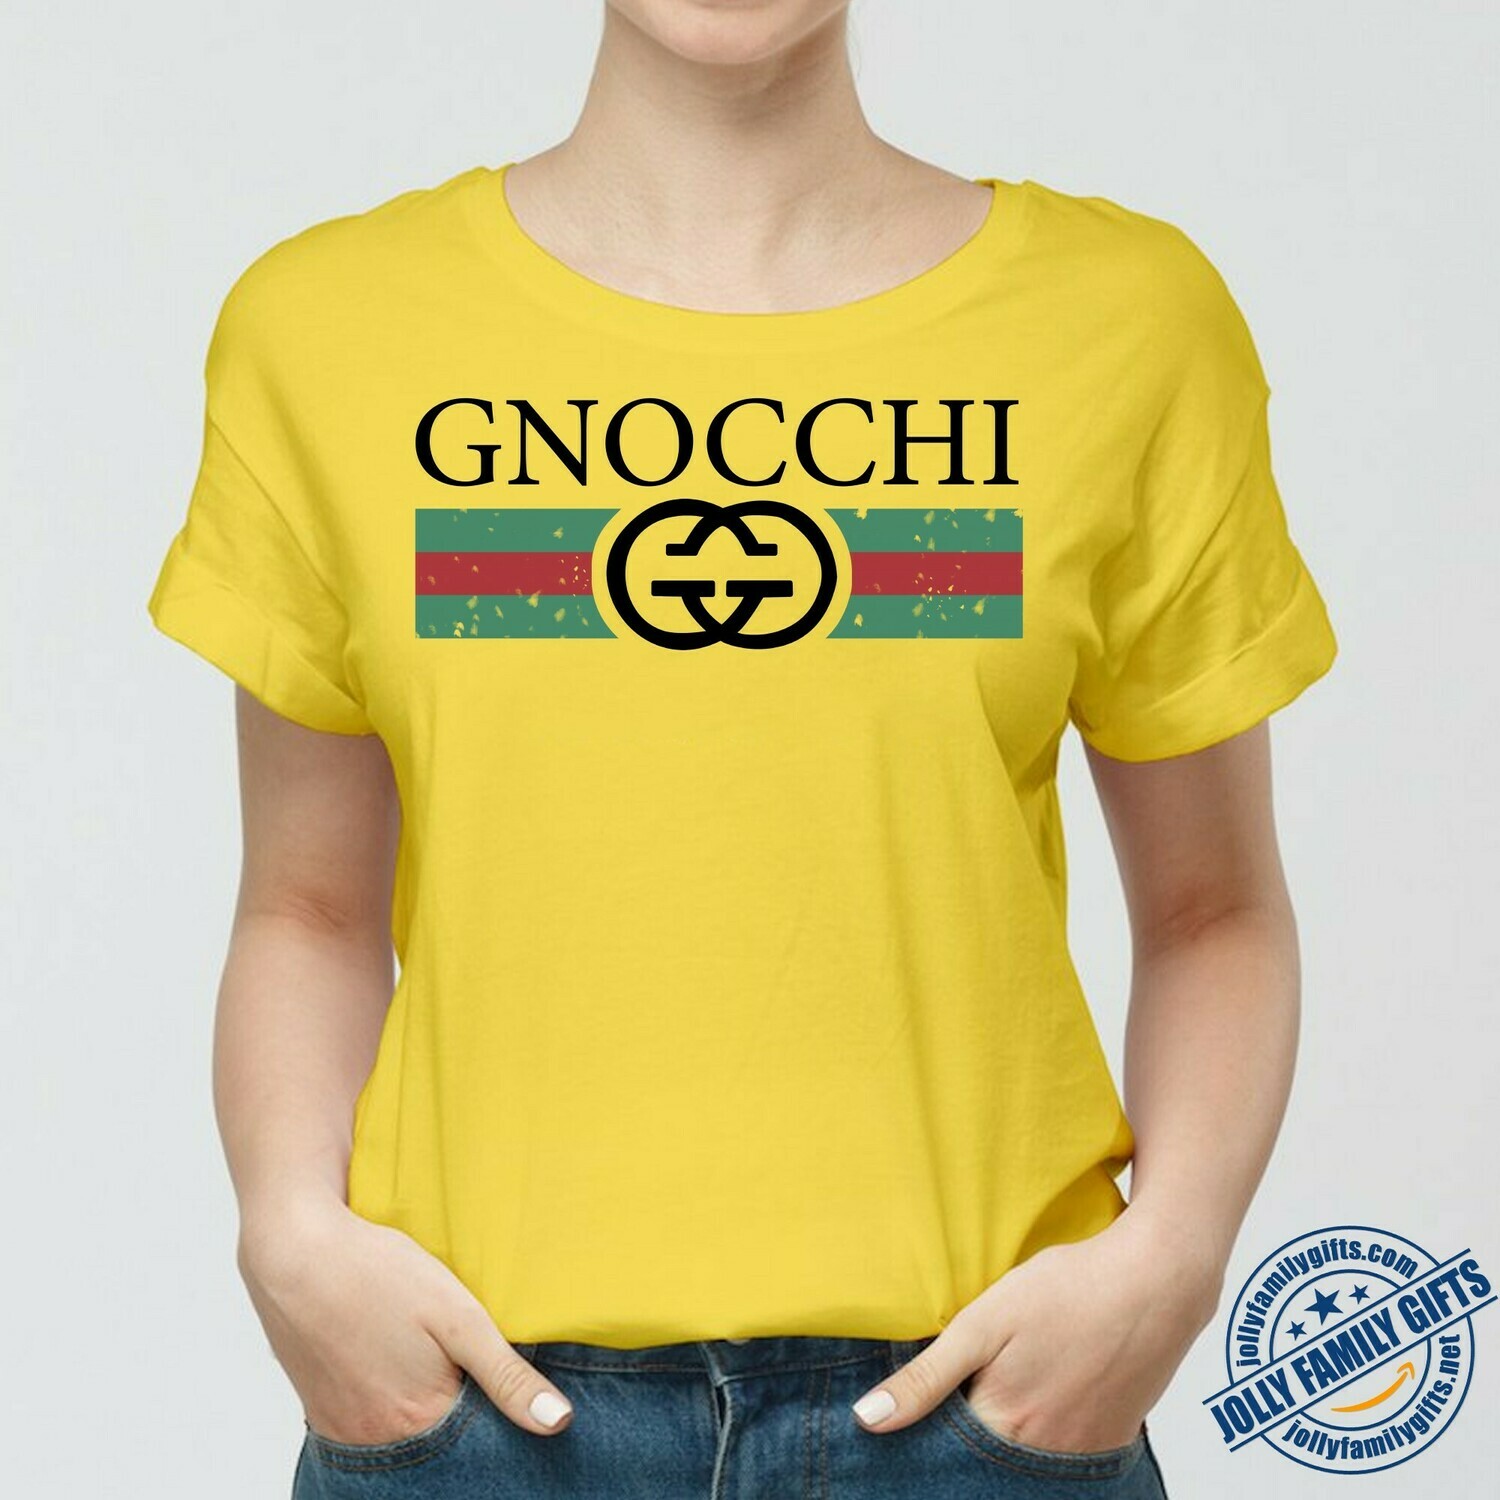 gnocchi shirt gucci